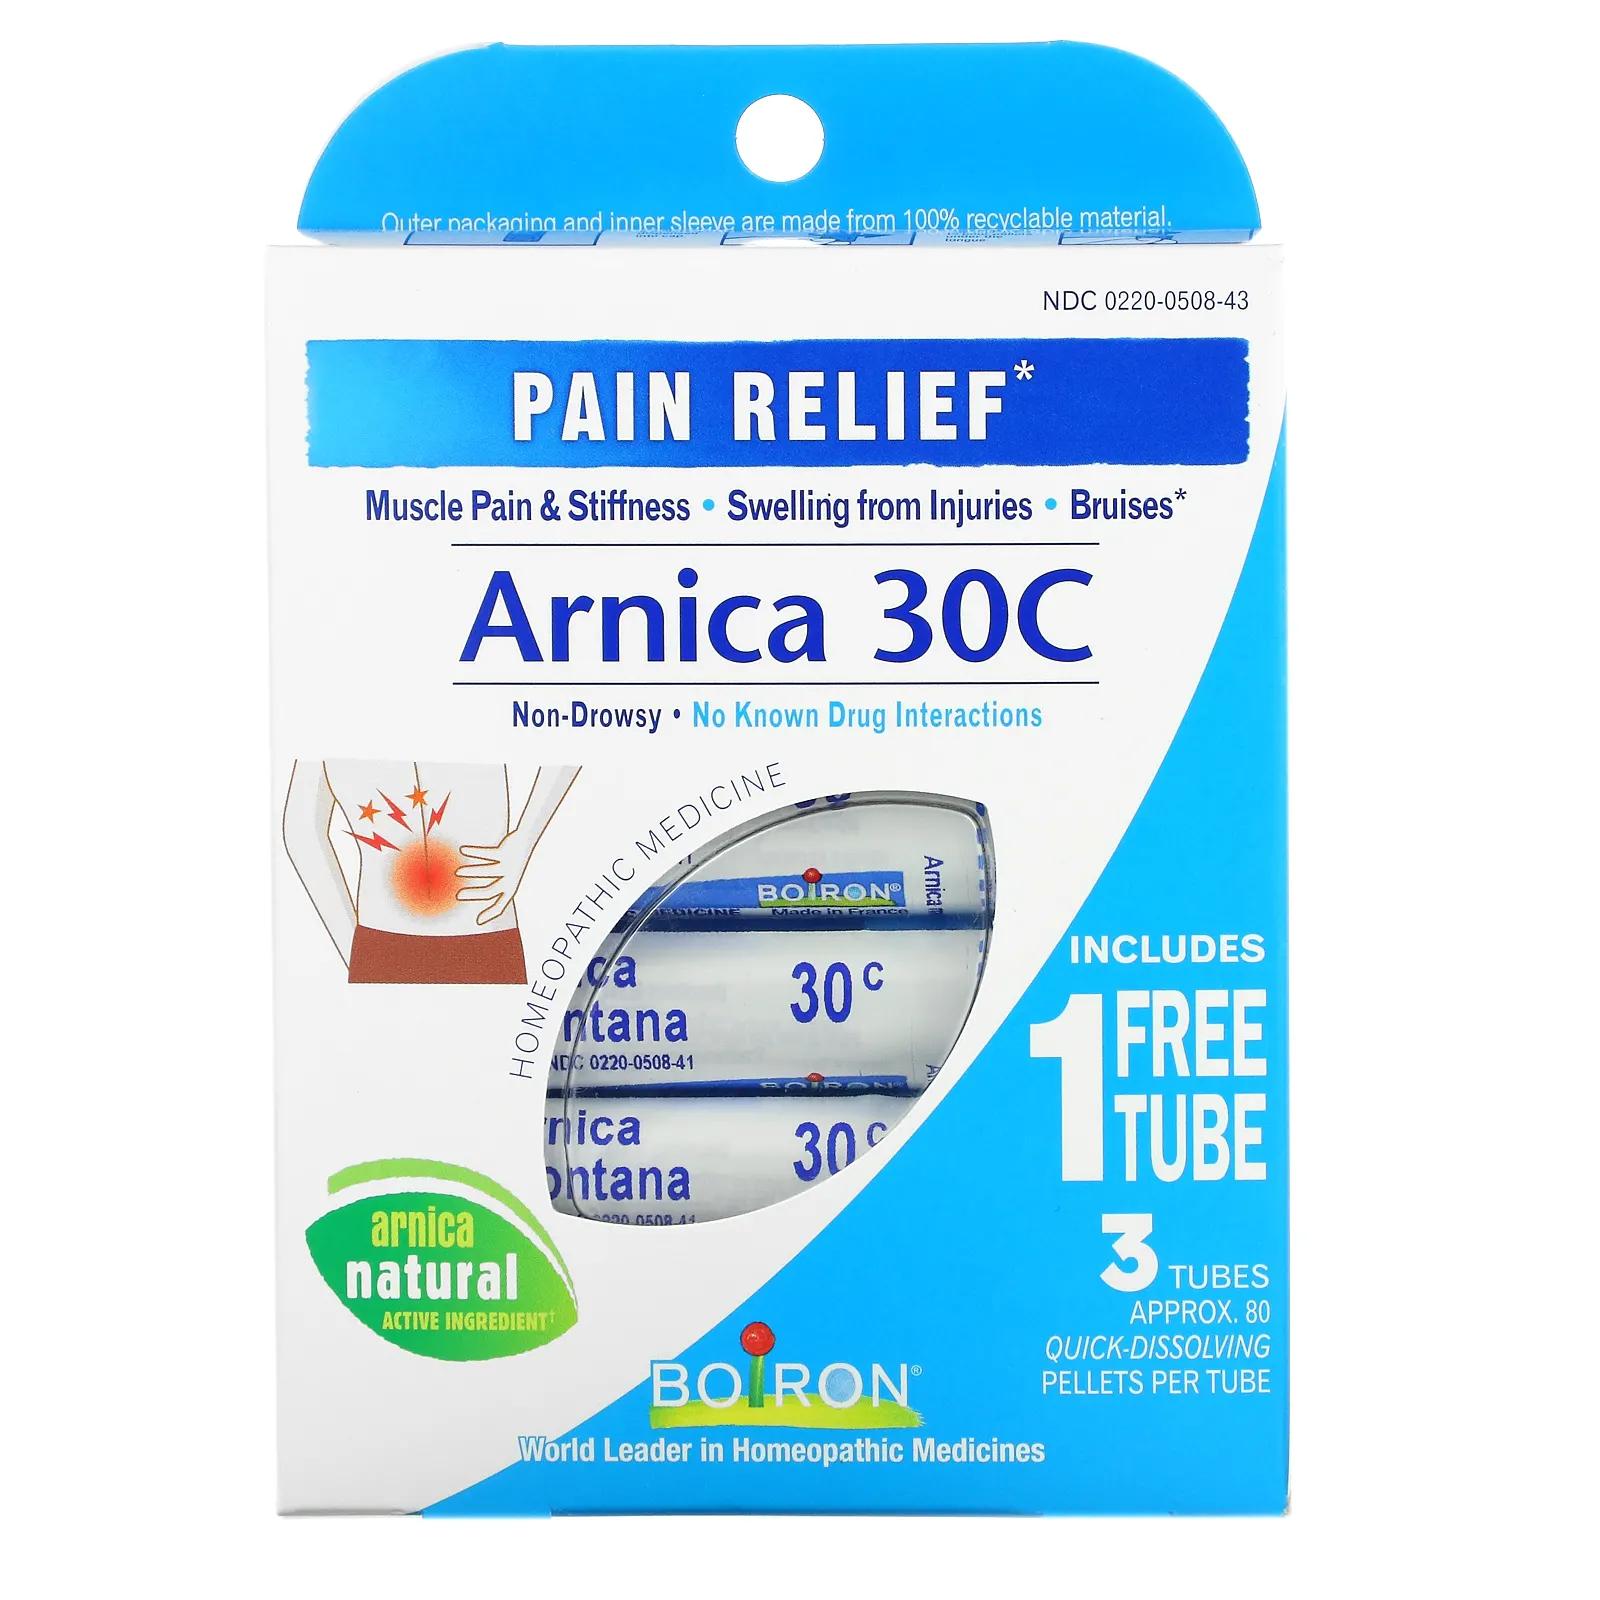 Boiron Single Remedies Arnica 30C обезболивающее 3 тюбика 80 пеллет в каждом чилибуха boiron single remedies nux vomica 80 гранул